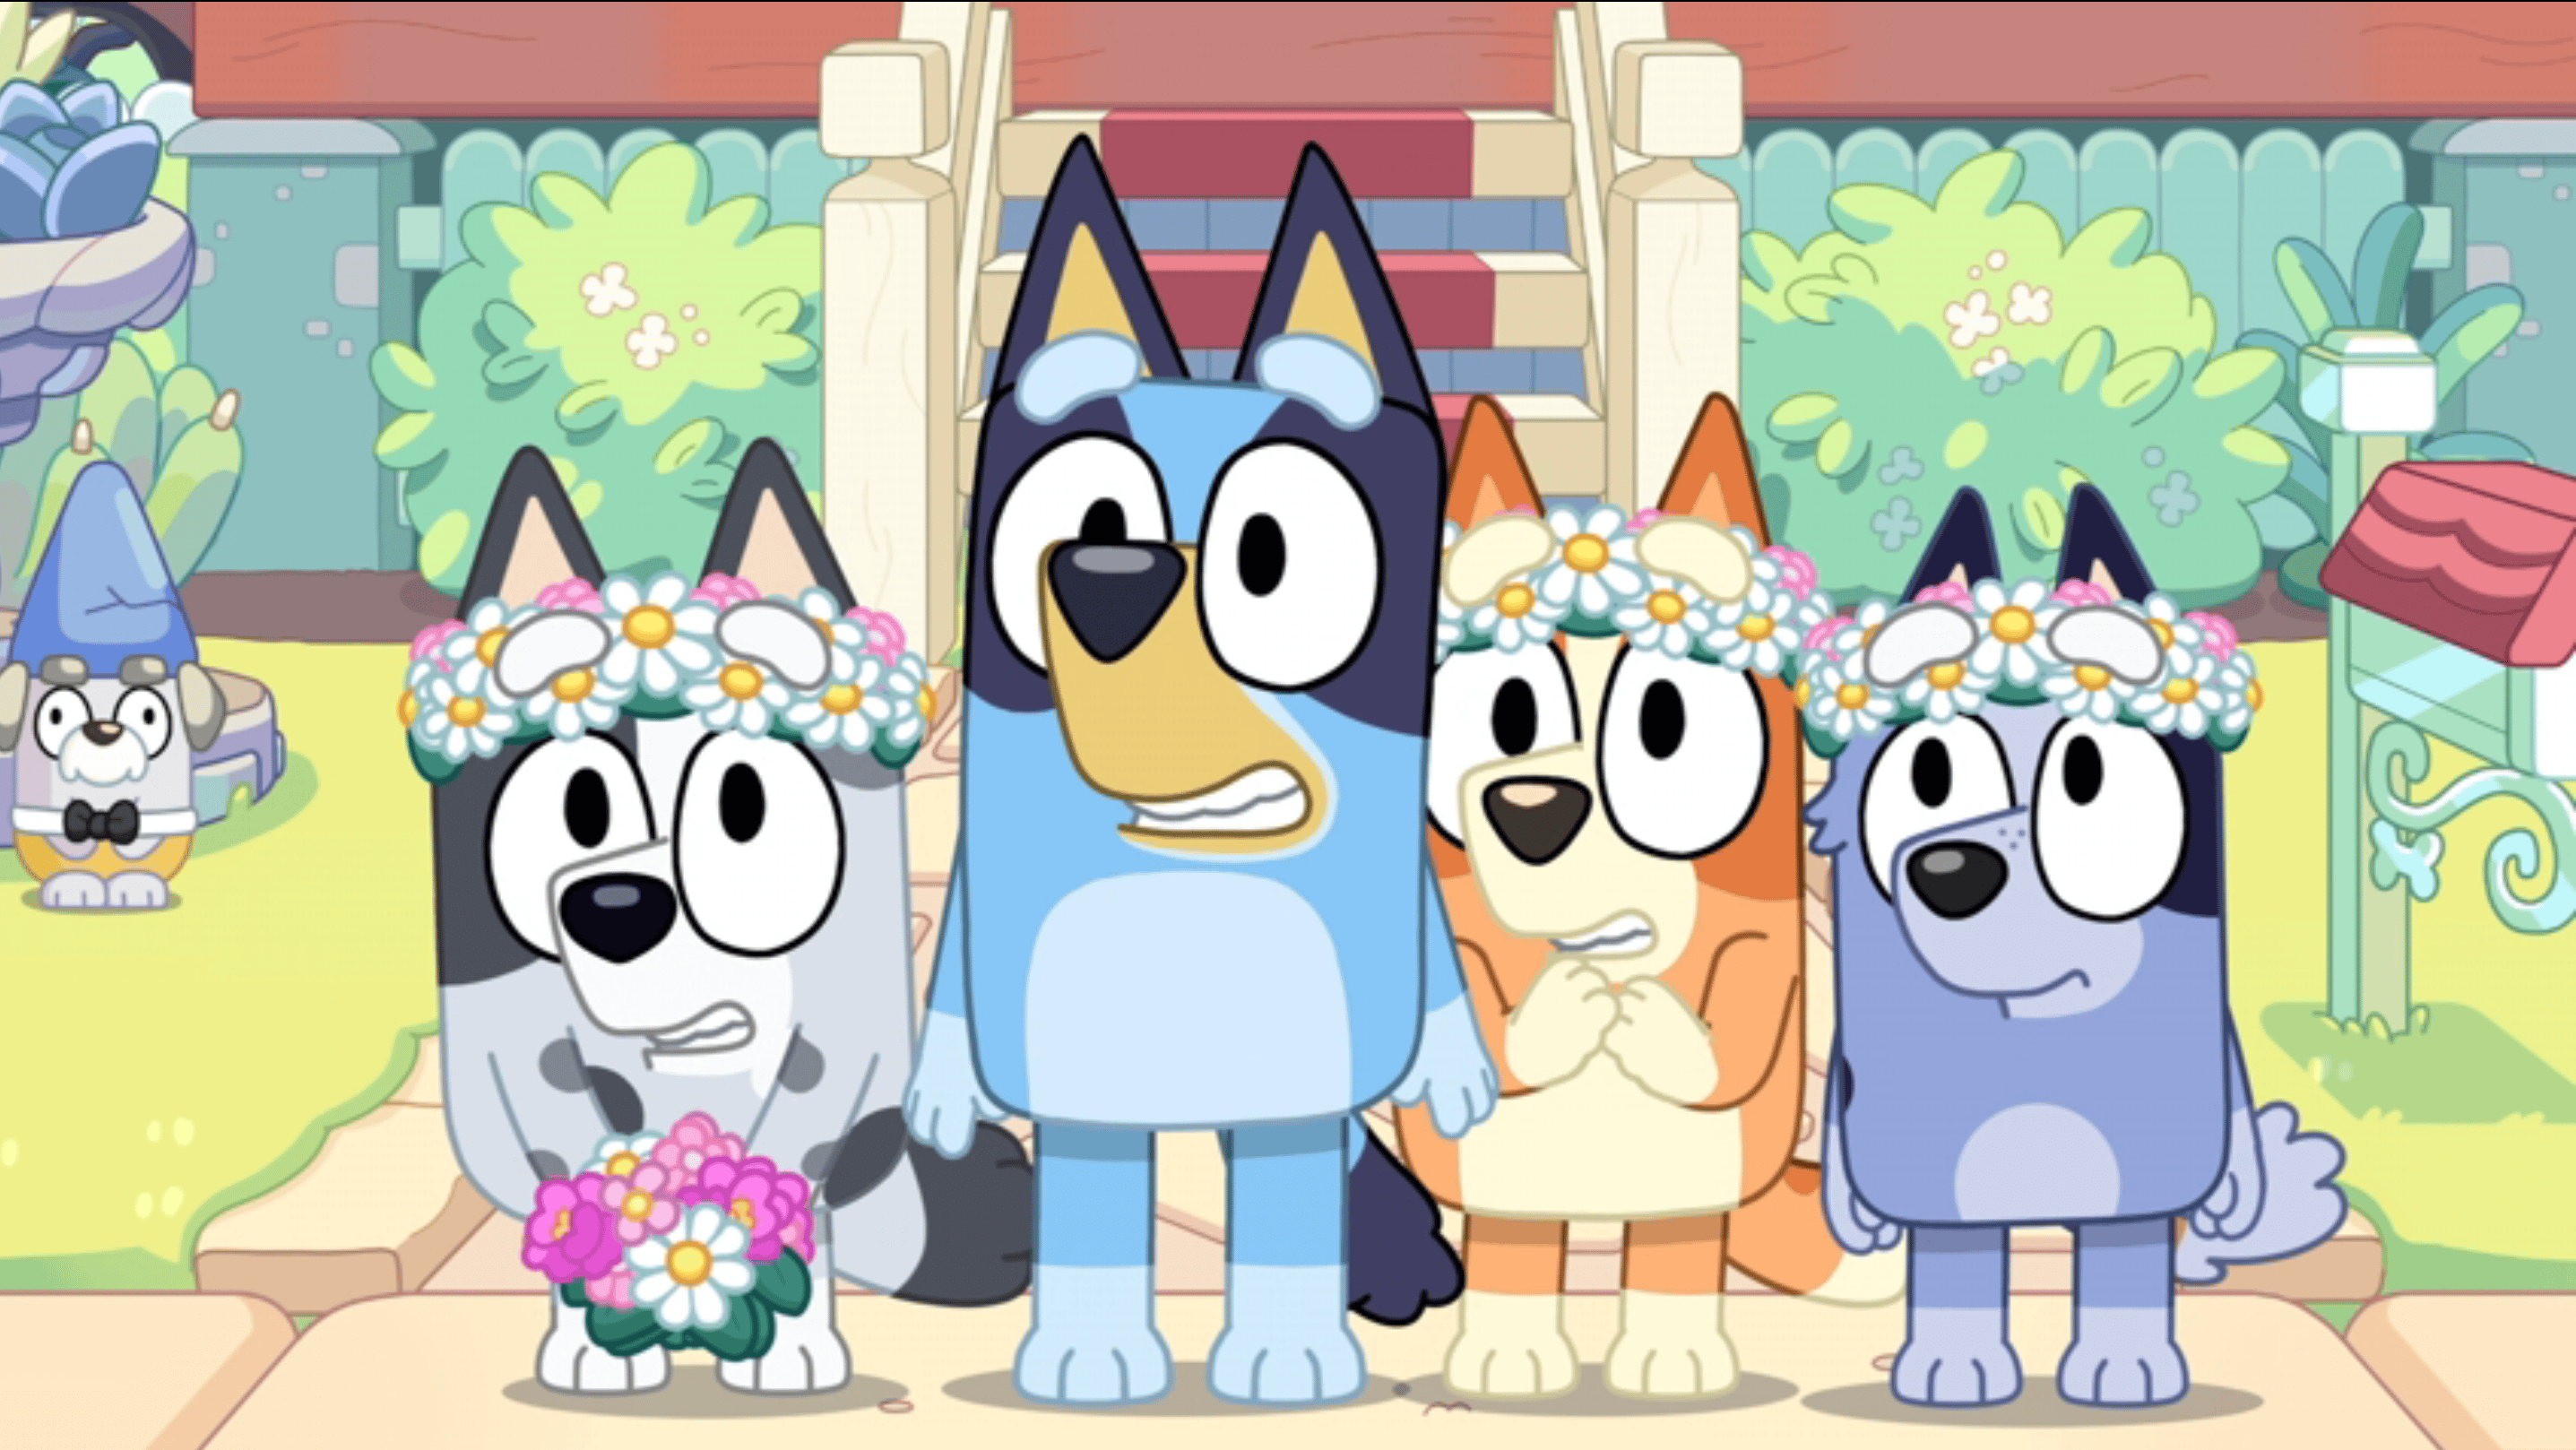 A screenshot from "Bluey:" four cartoon dog chidlren in flower crowns grimacing nervously